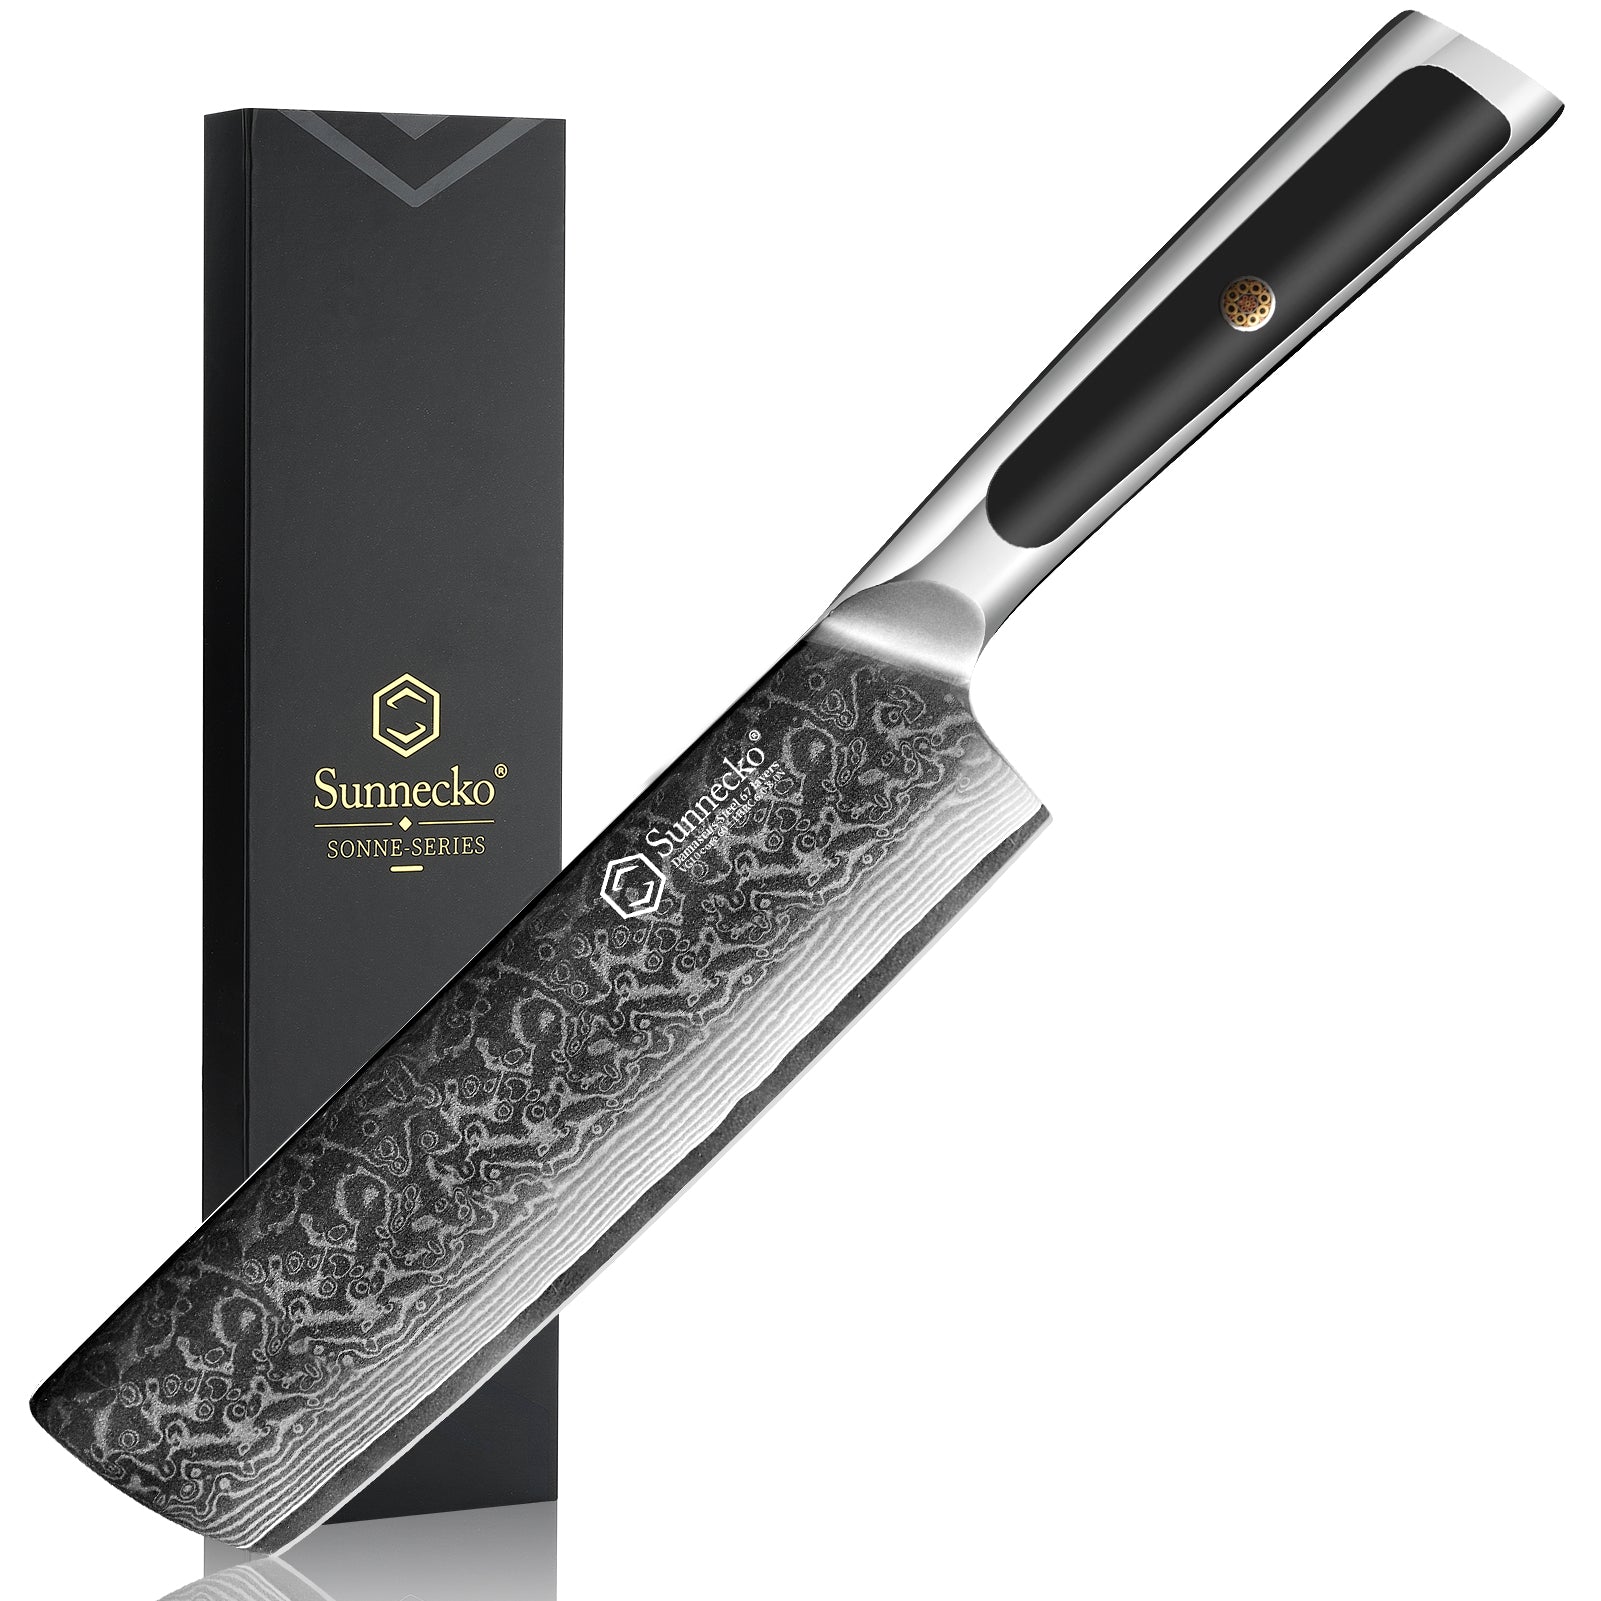 7 Piece Japanese VG10 Damascus Chef Knife Set 